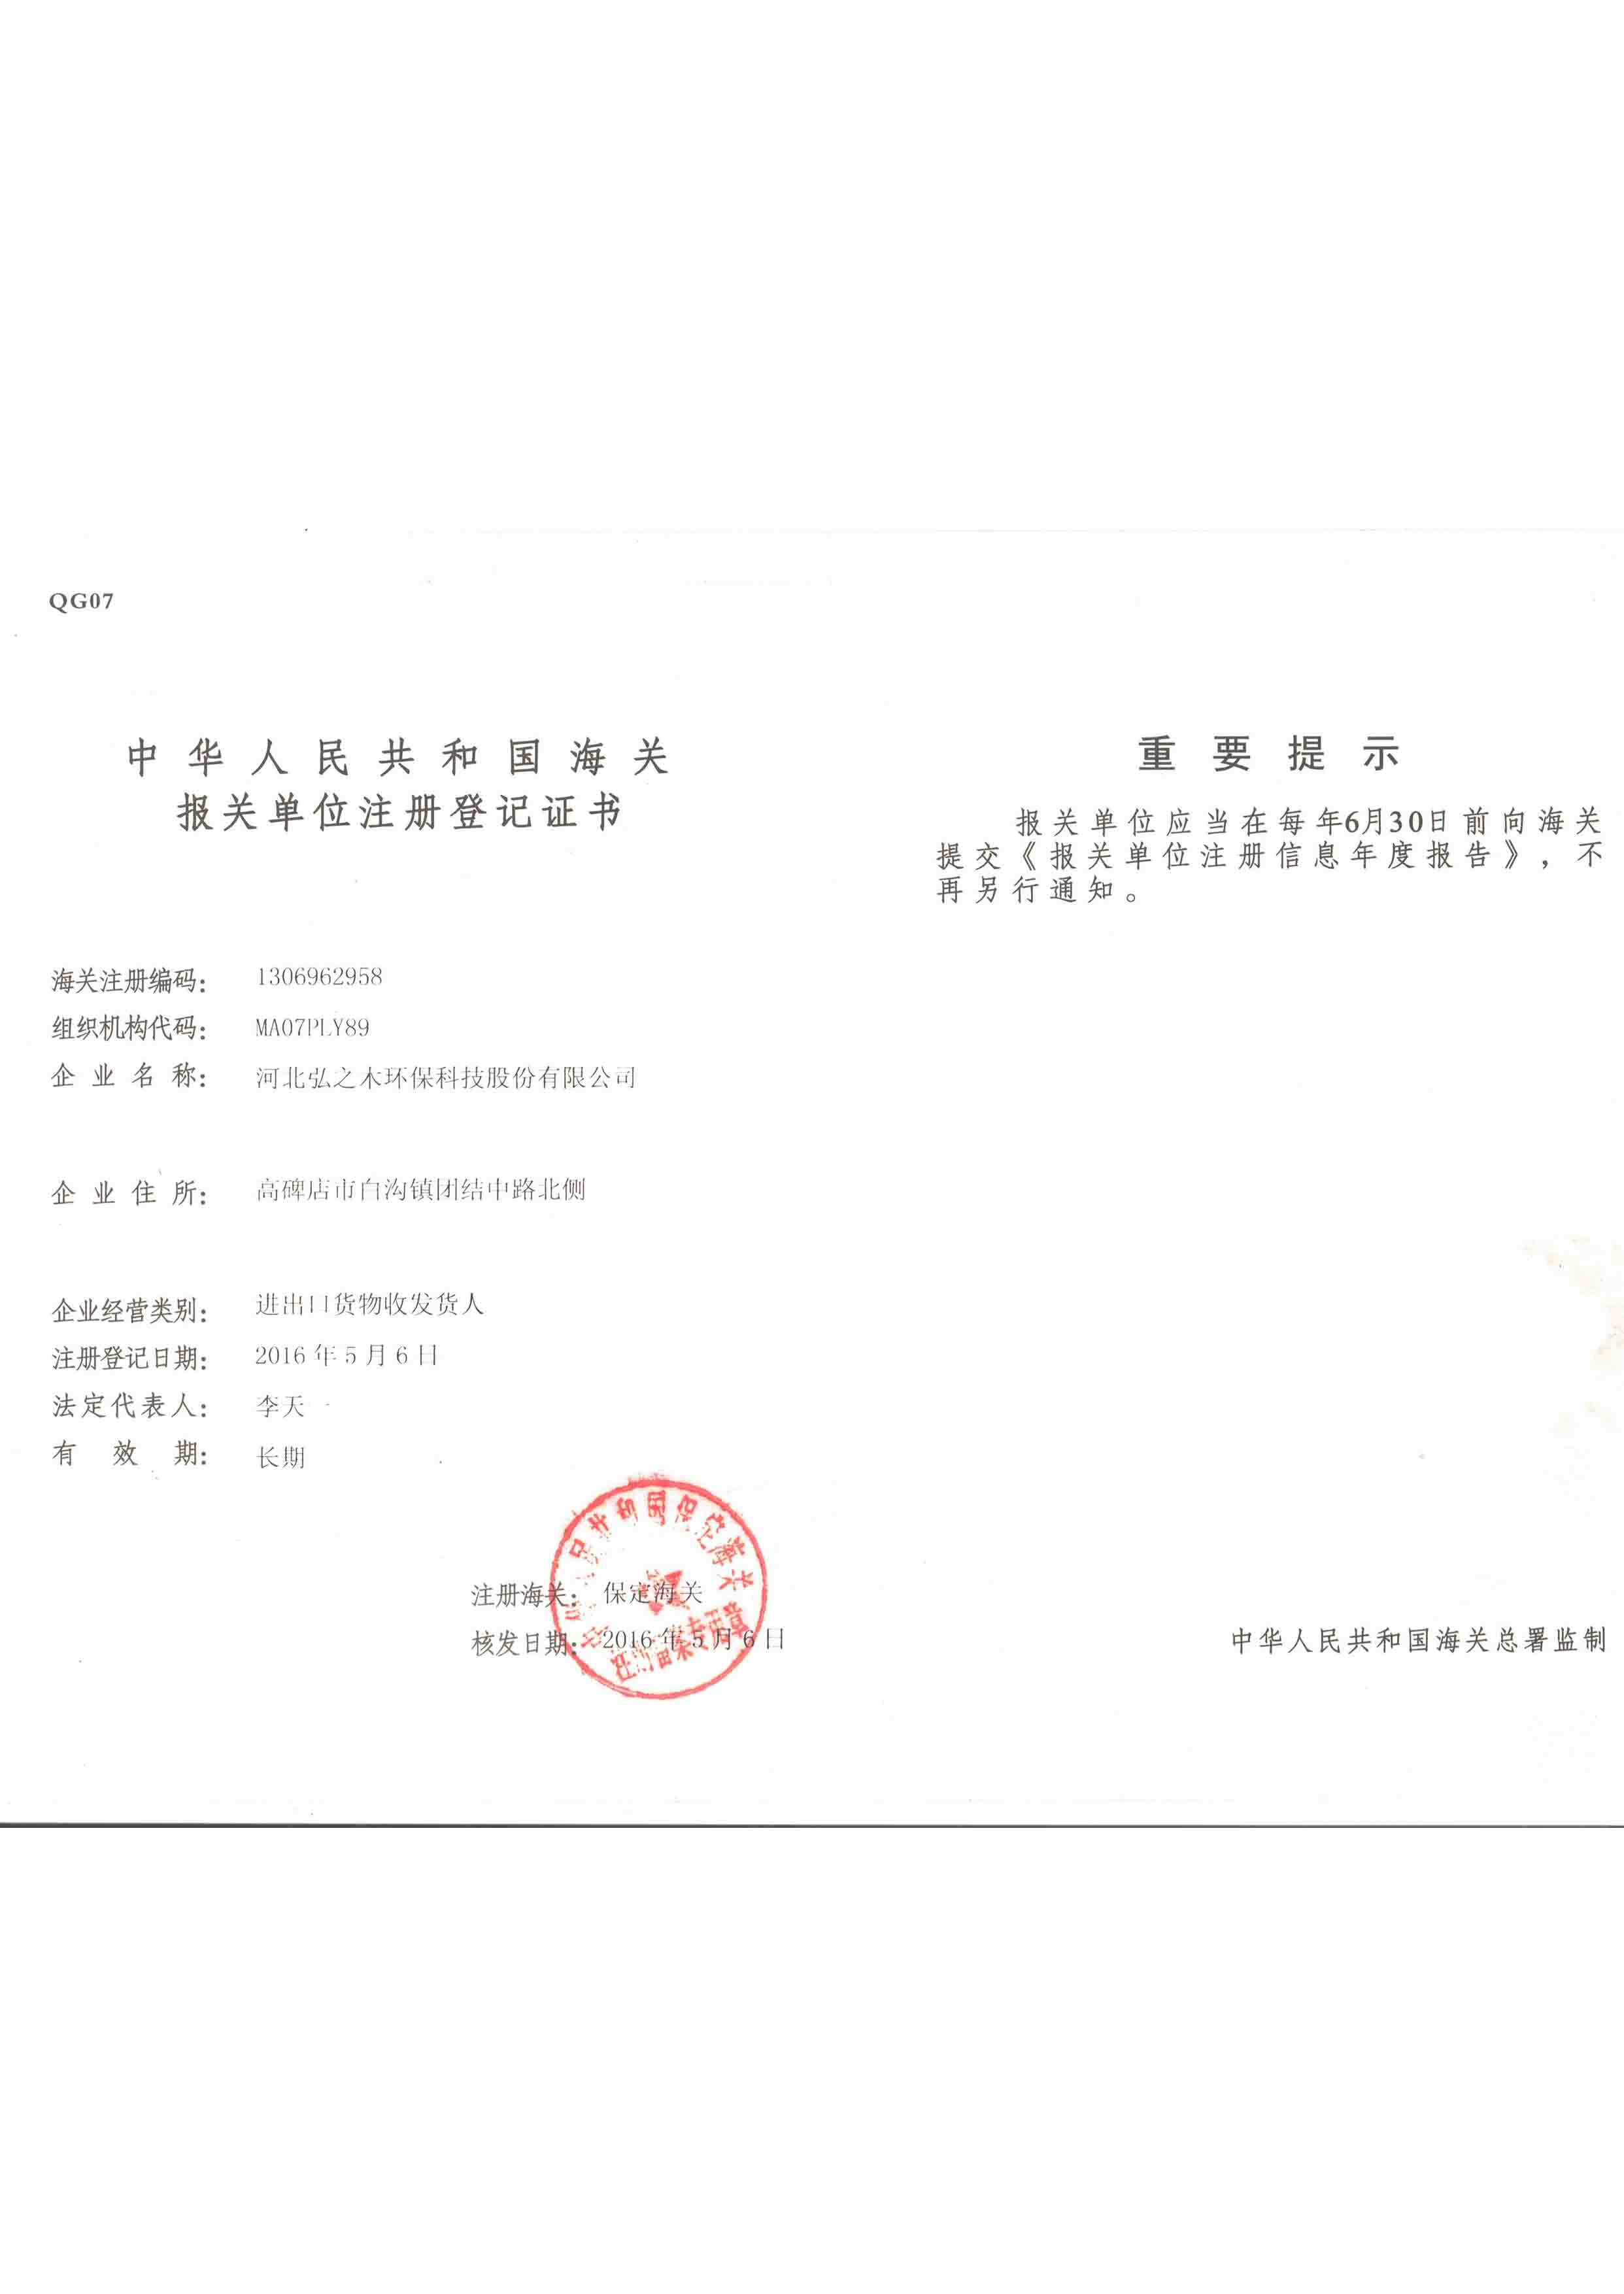 Customs declaration registration certificate